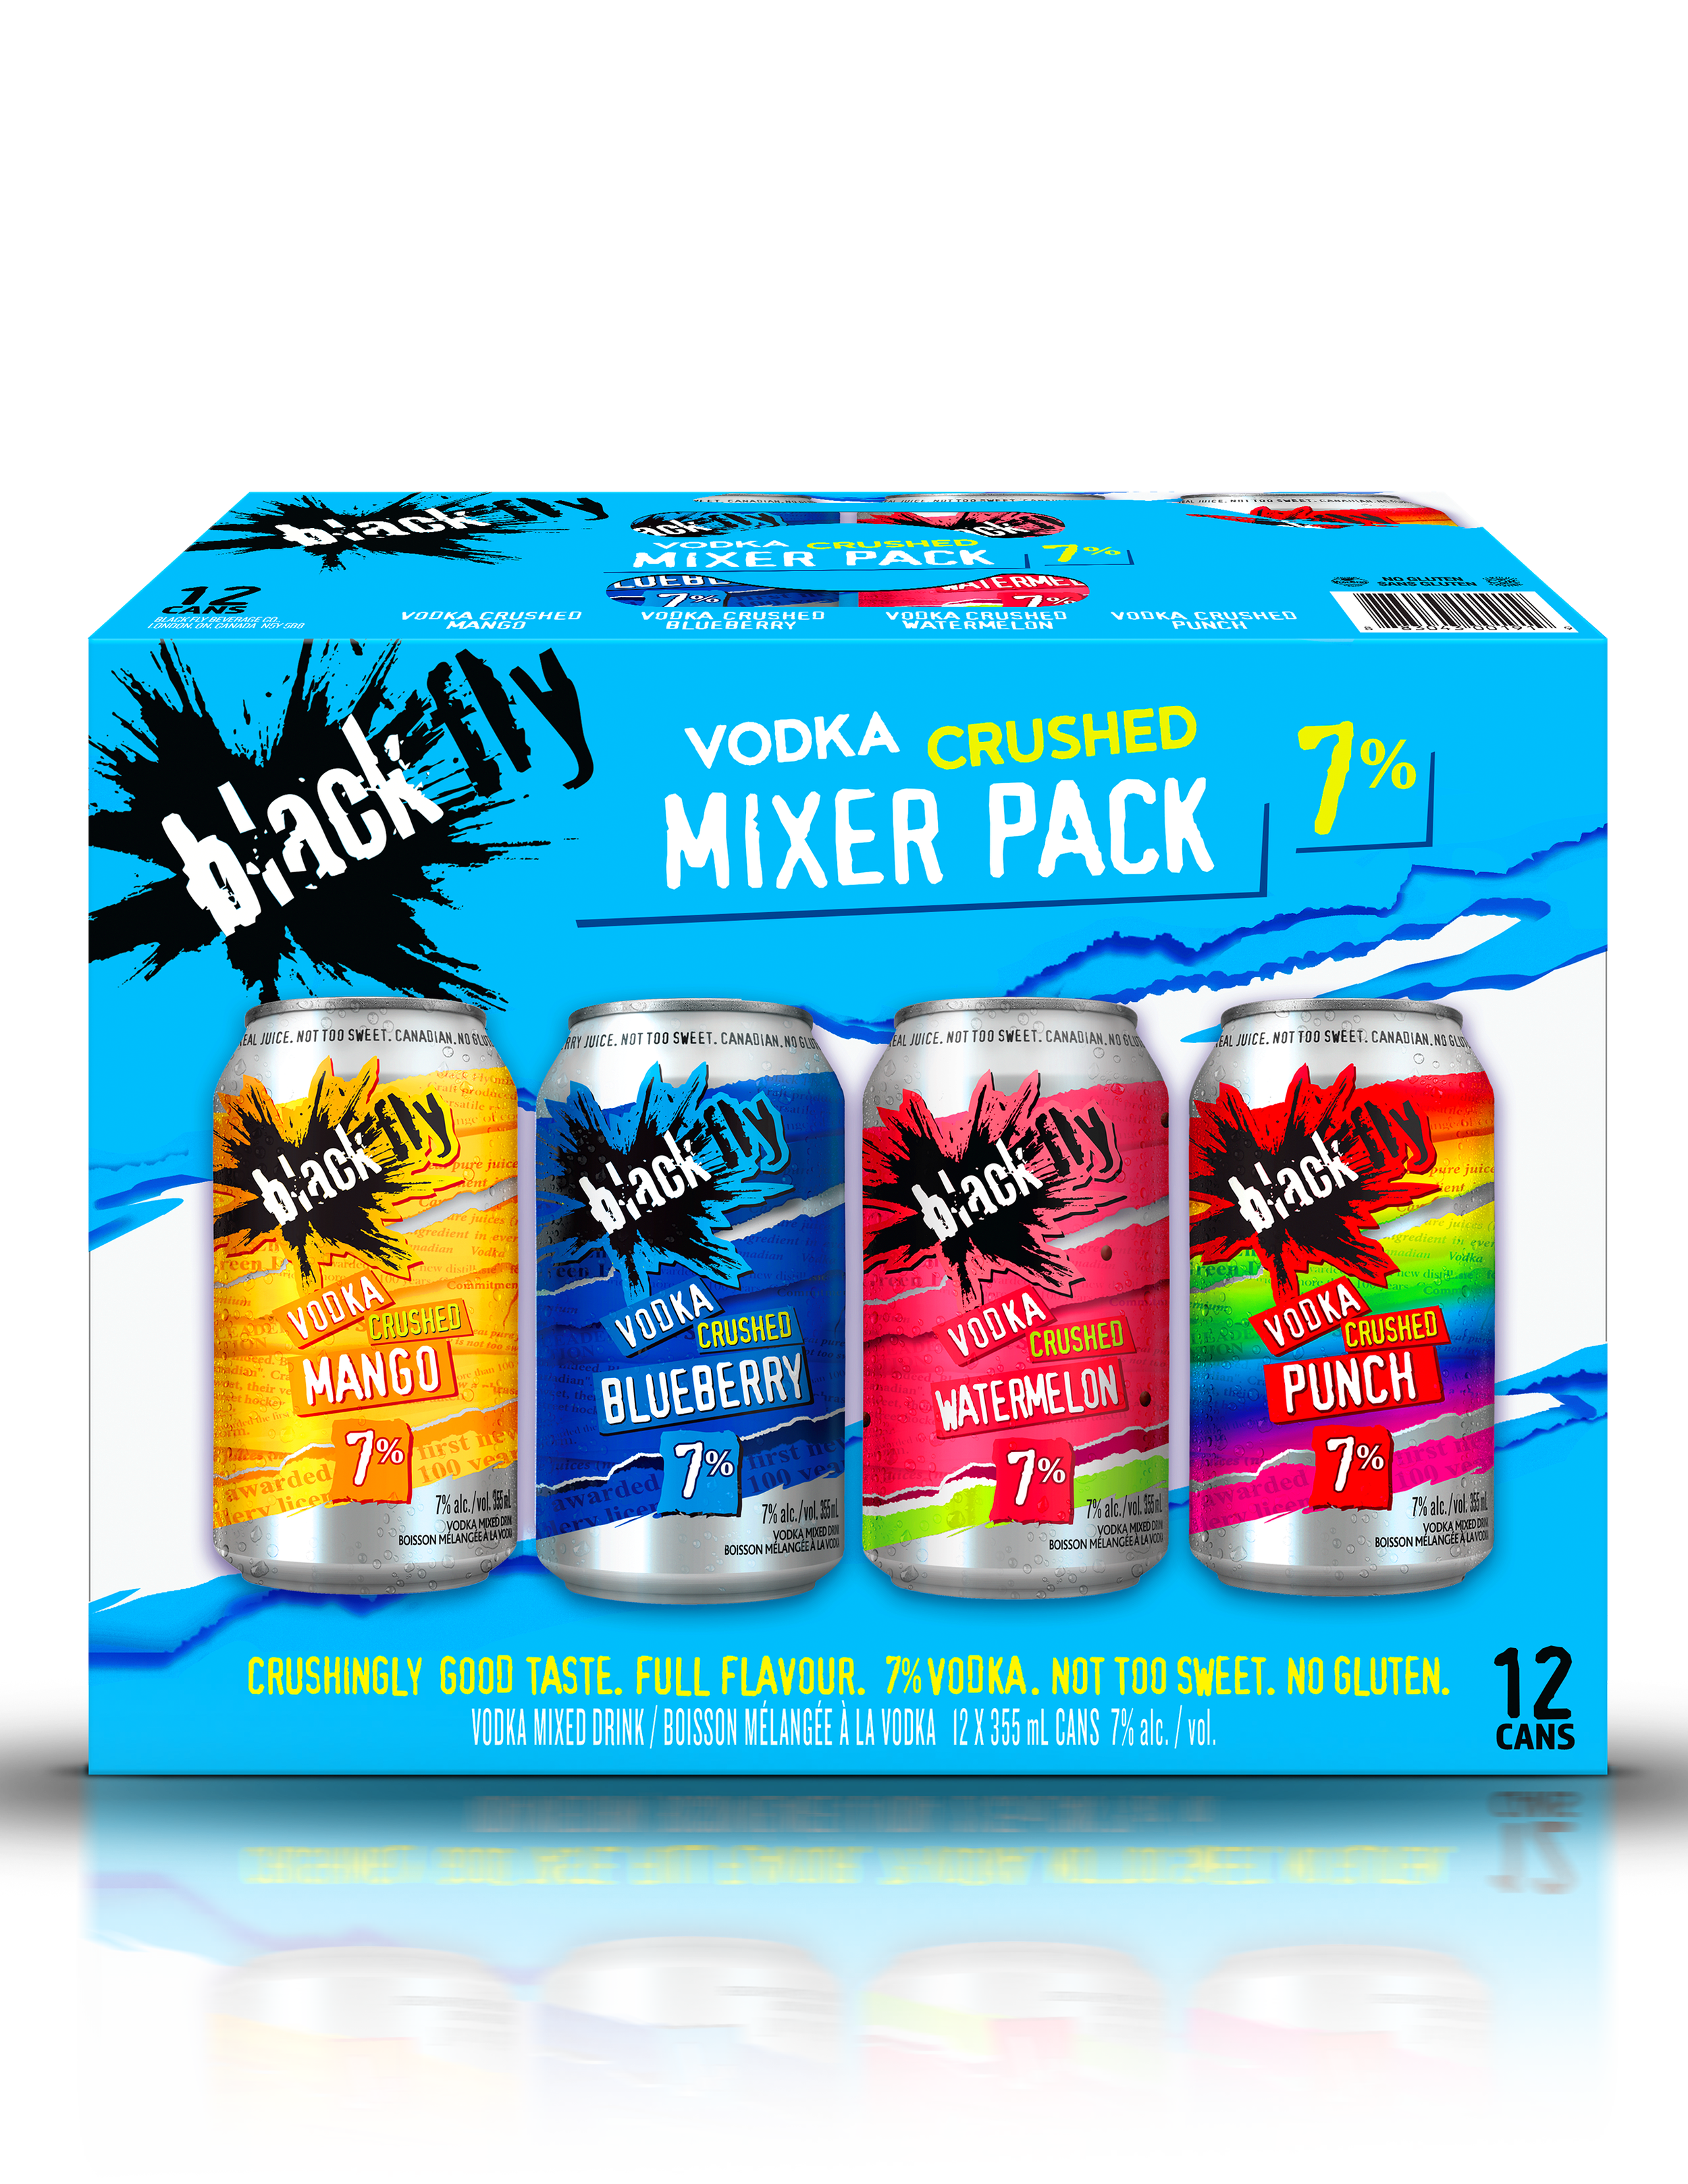 Vodka Crushed_Mixer Pack (Blue)_.png